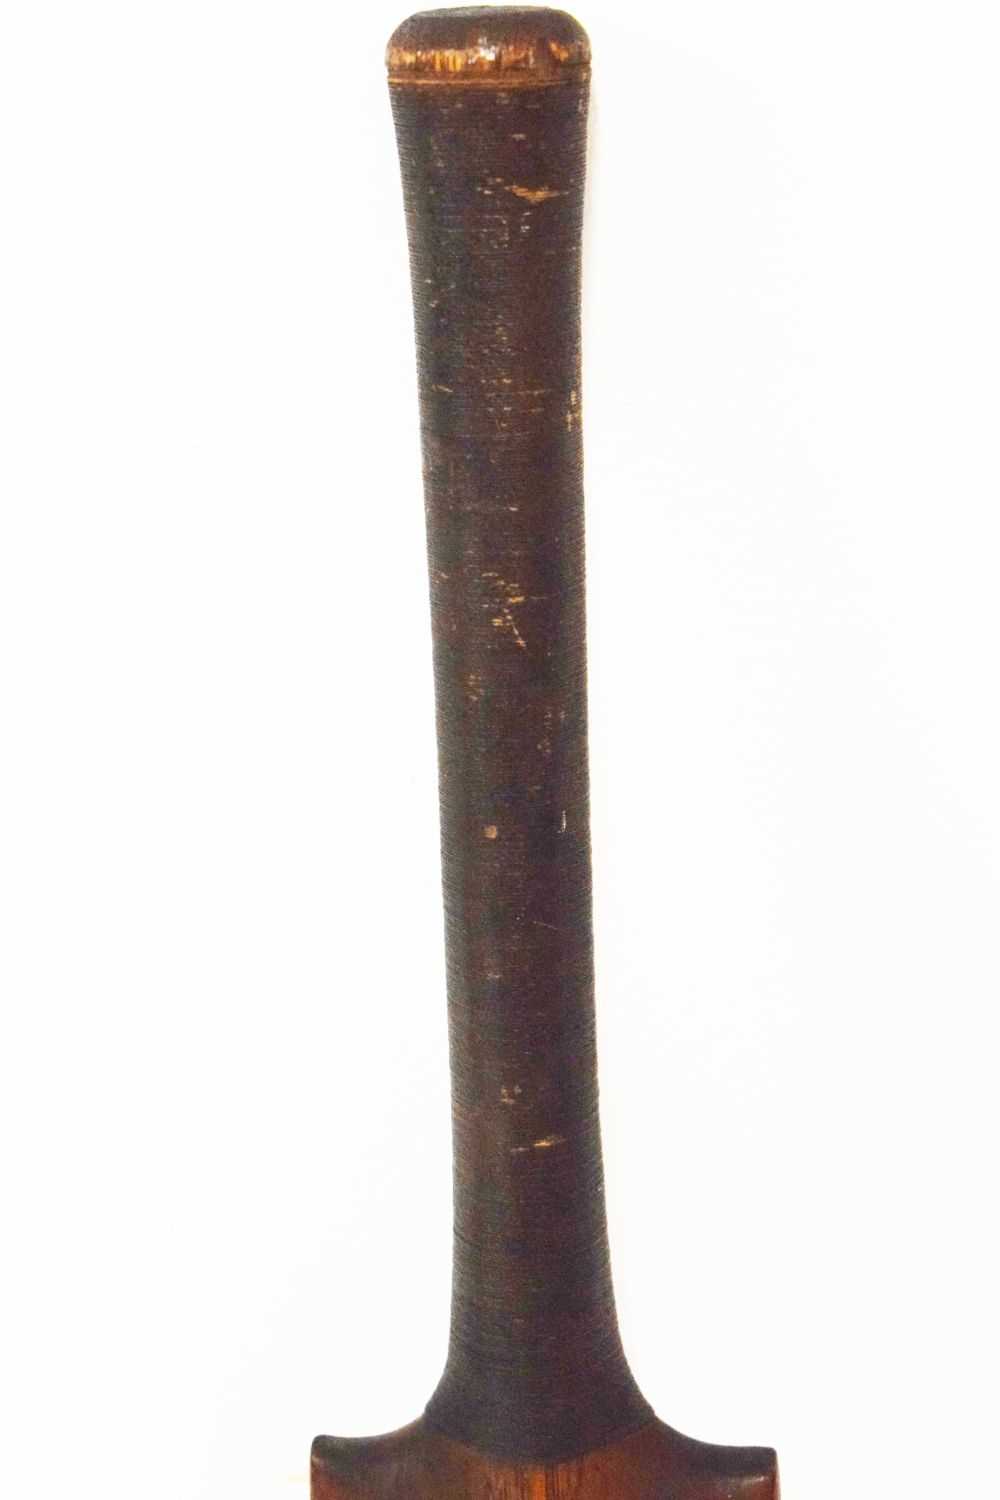 Bristol Interest - Victorian cricket bat - Image 2 of 4